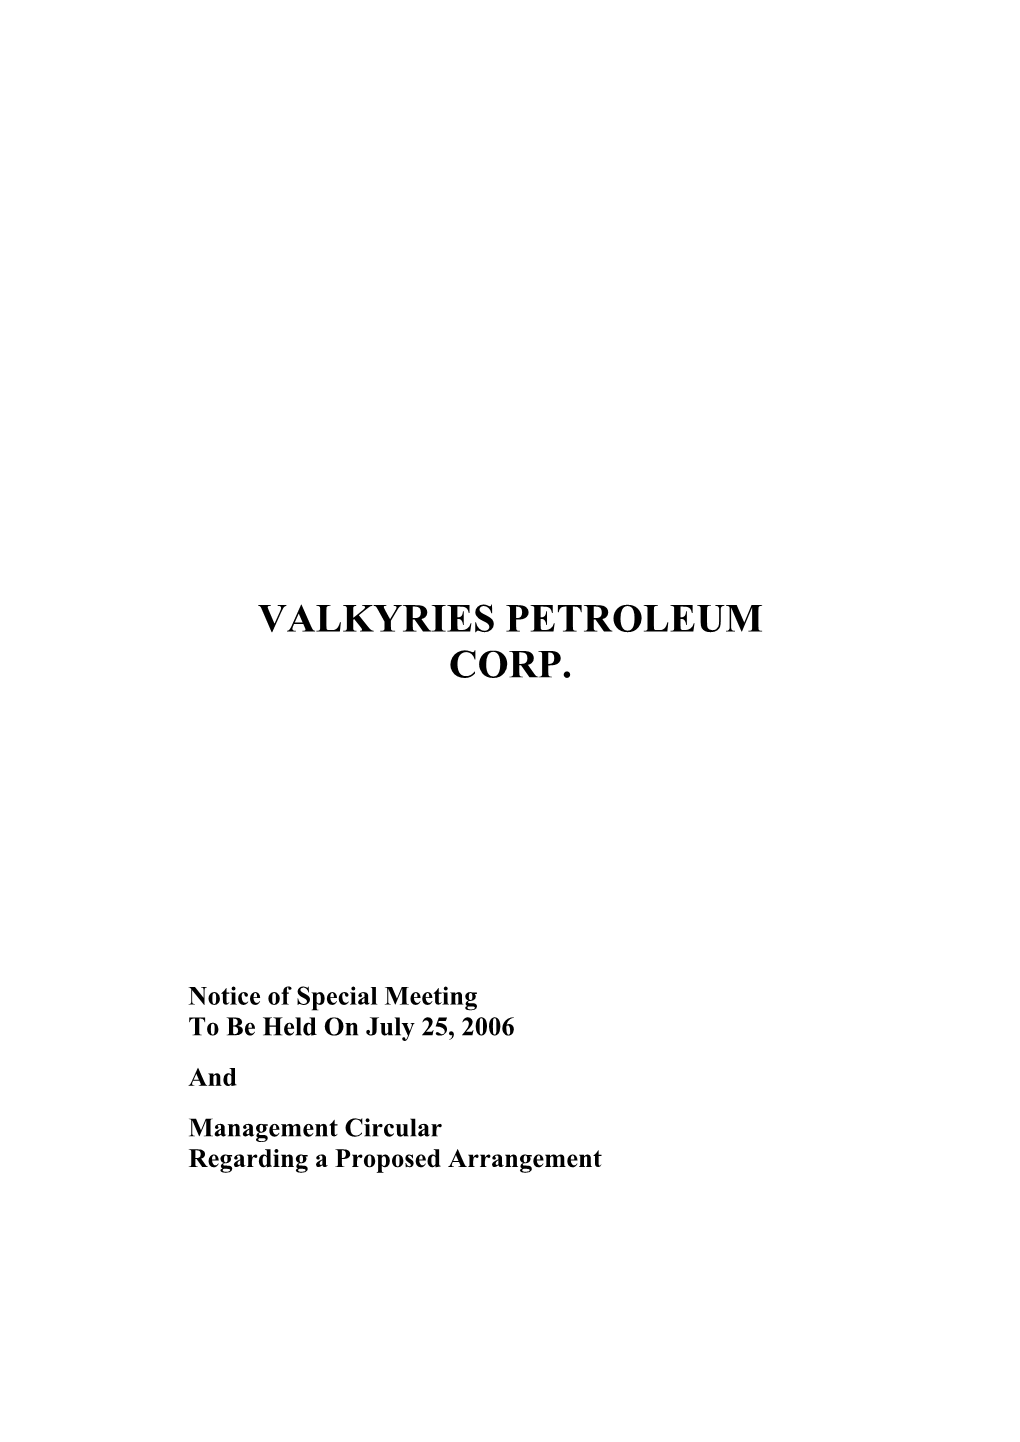 Valkyries Petroleum Corp